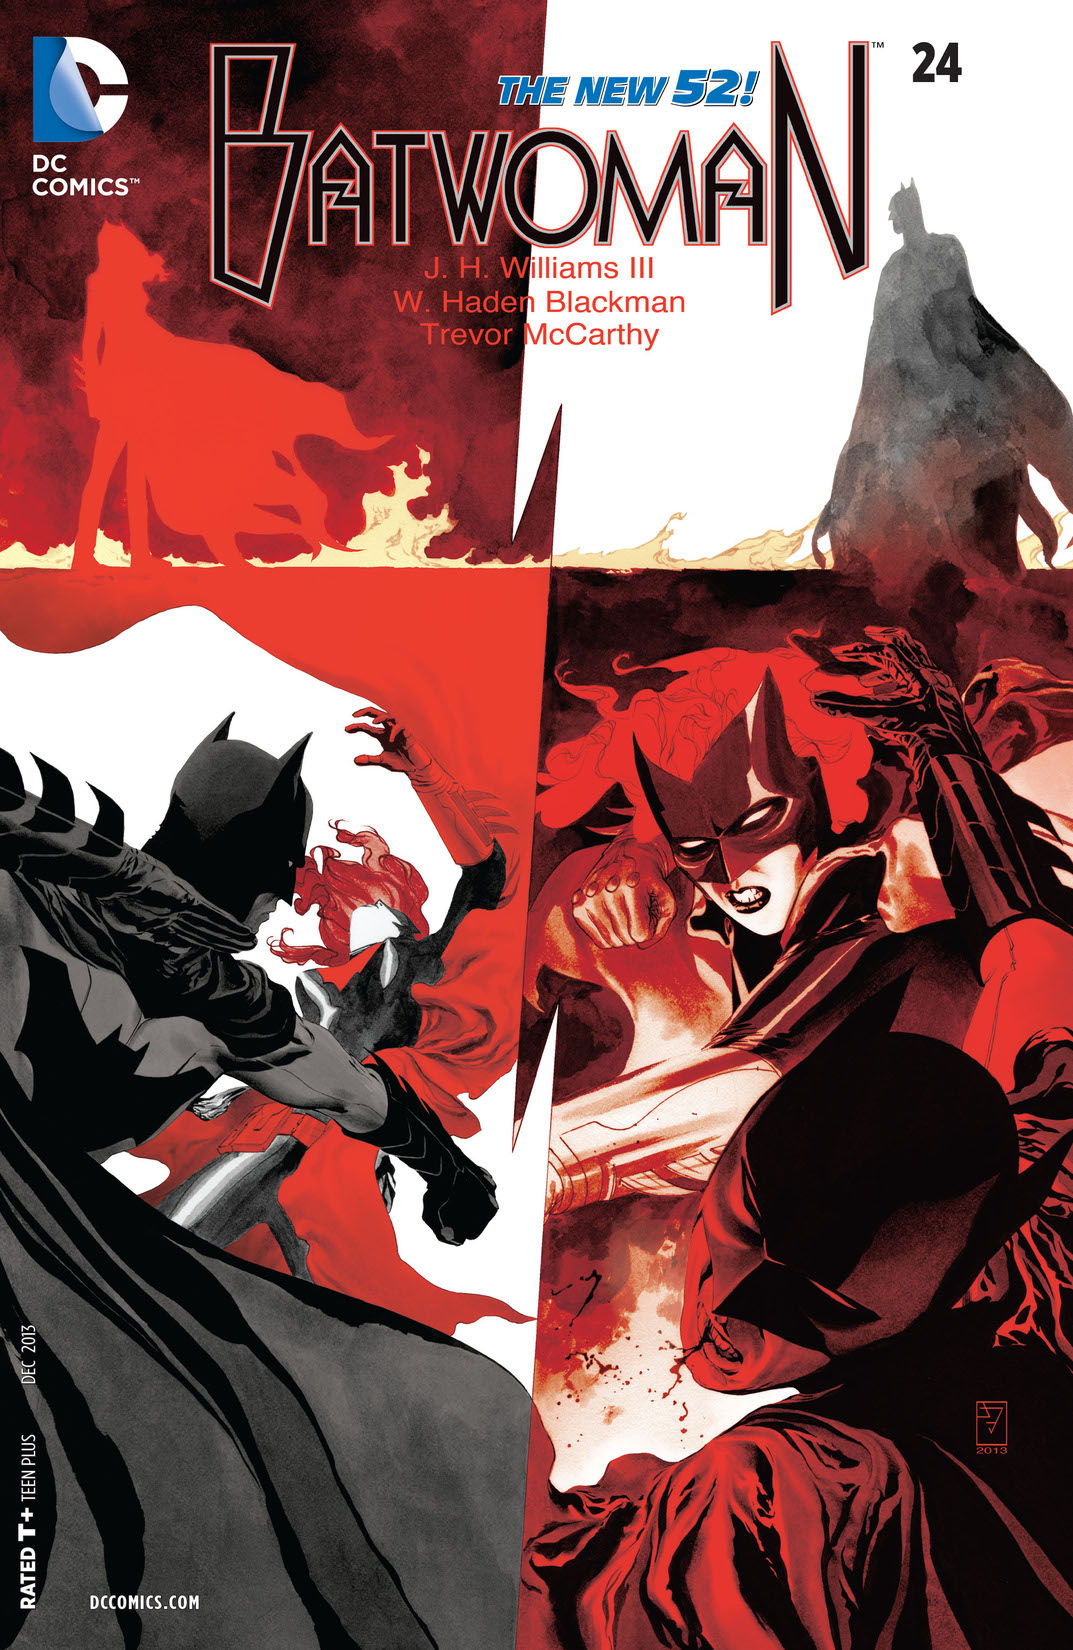 Batwoman (2011-) #24 preview images